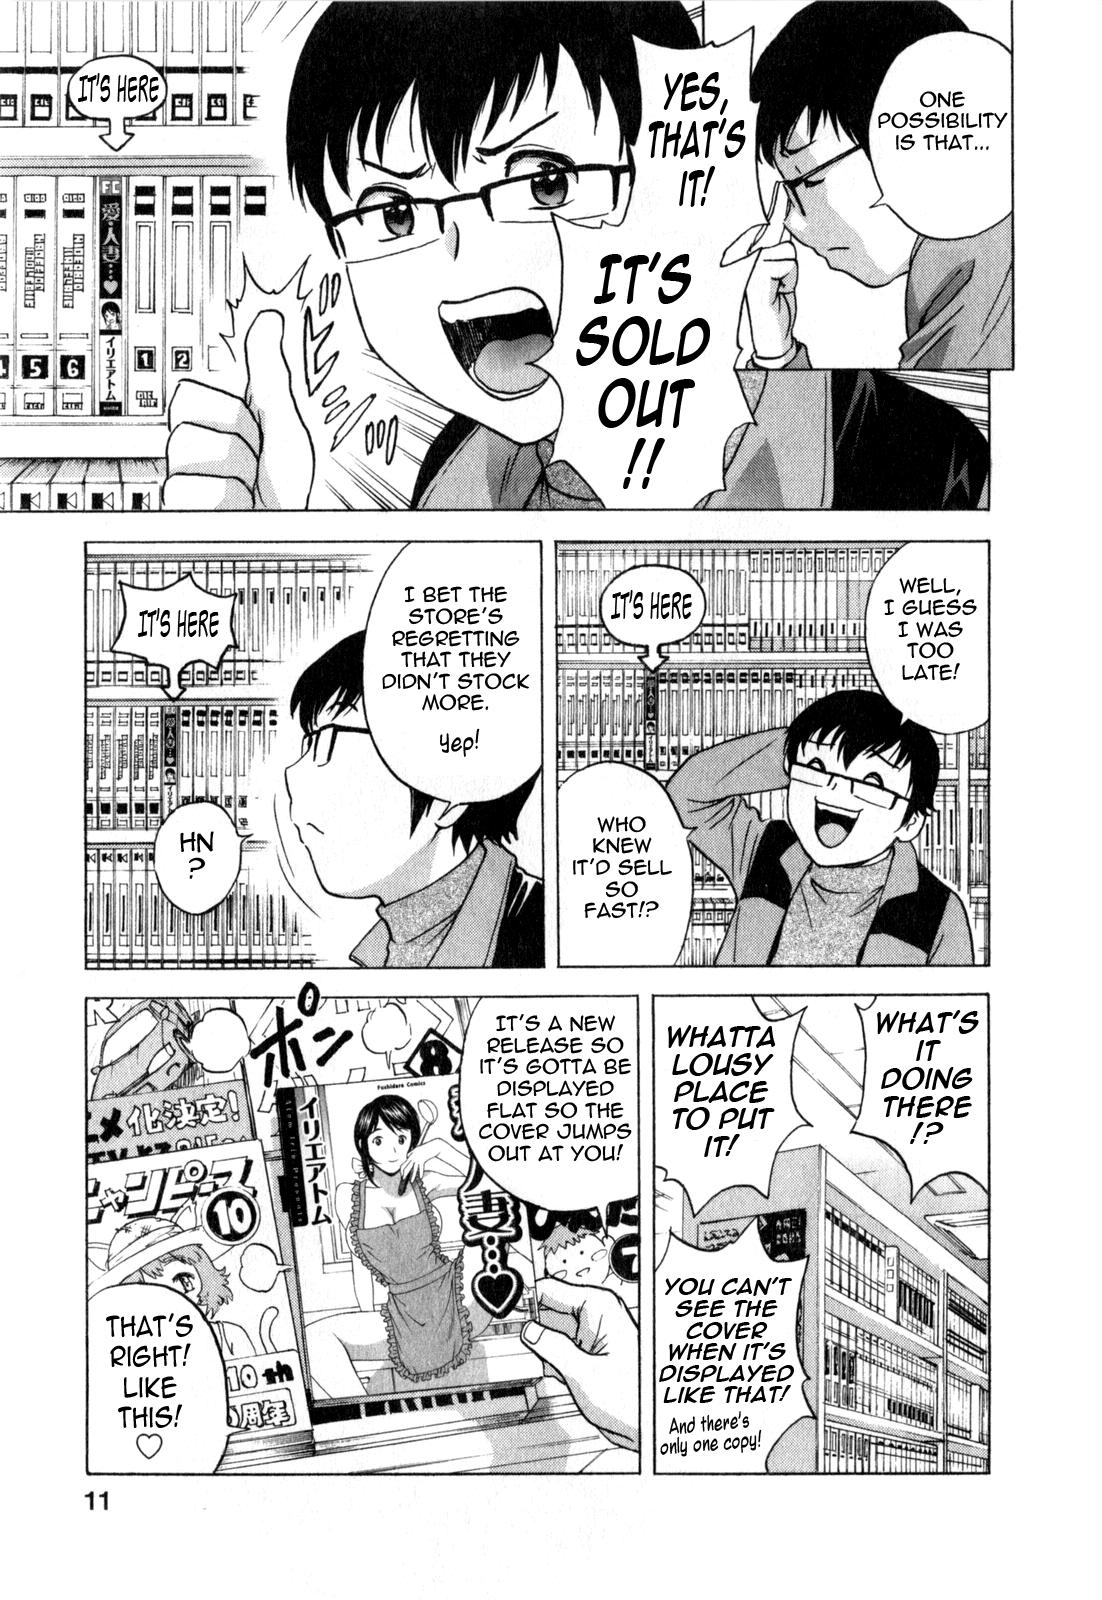 [Hidemaru] Life with Married Women Just Like a Manga 3 - Ch. 1-4 [English] {Tadanohito} 12